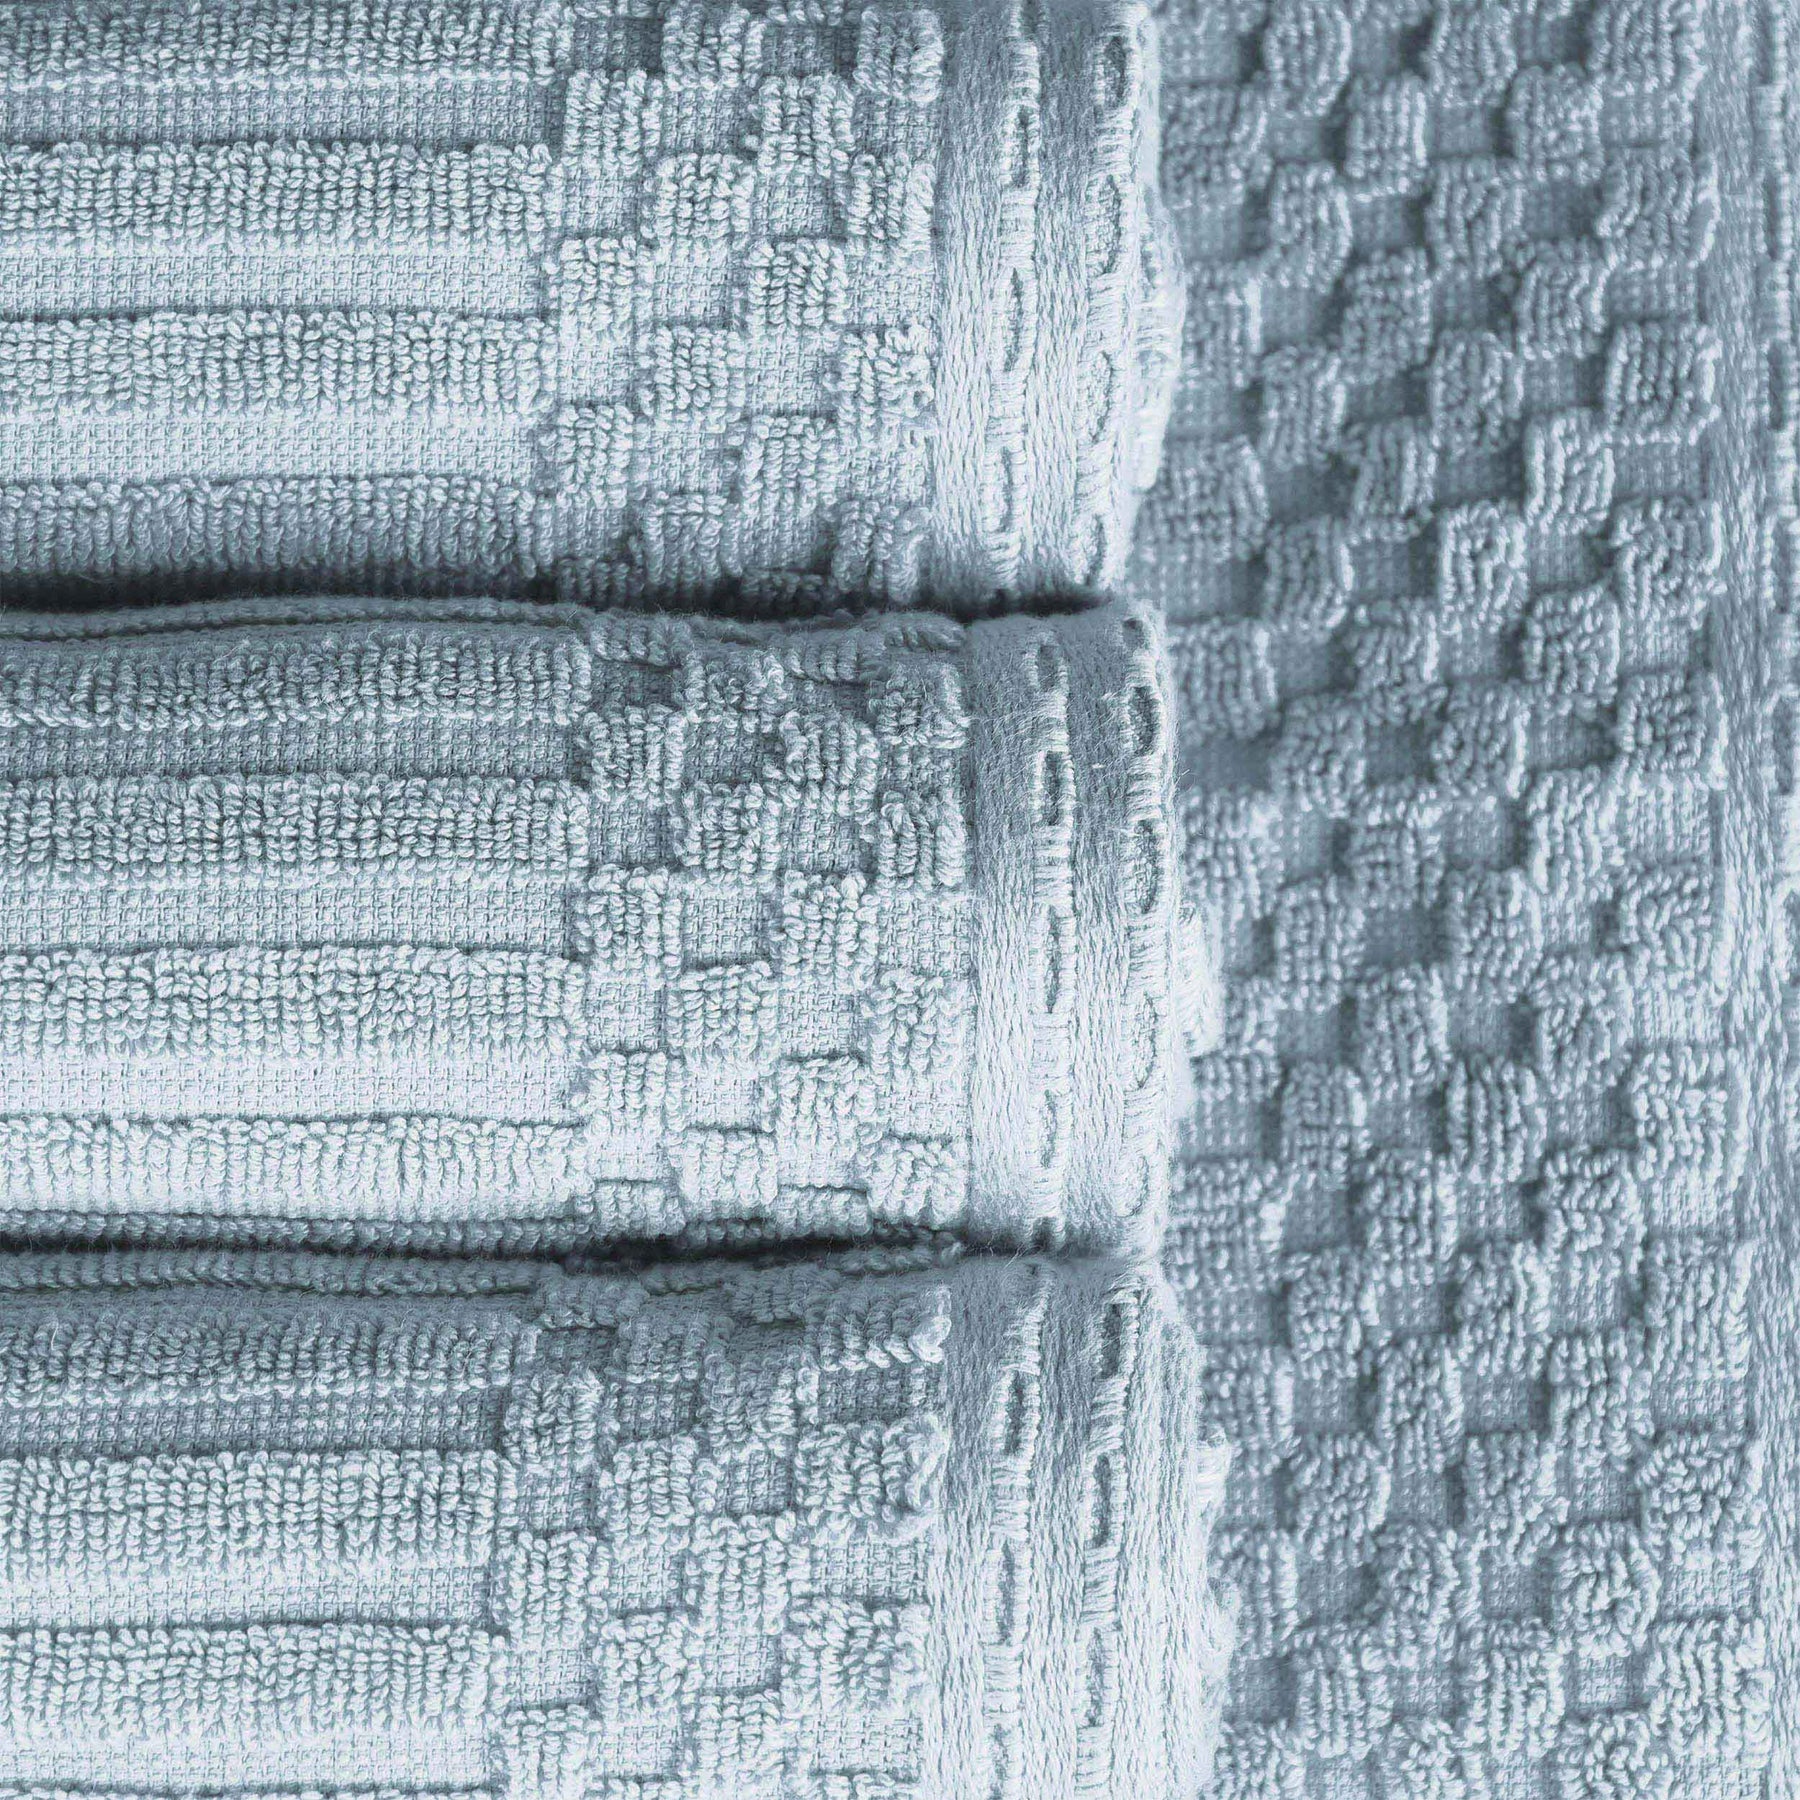 Ribbed Textured Cotton 2 Piece Bath Sheet Towel Set